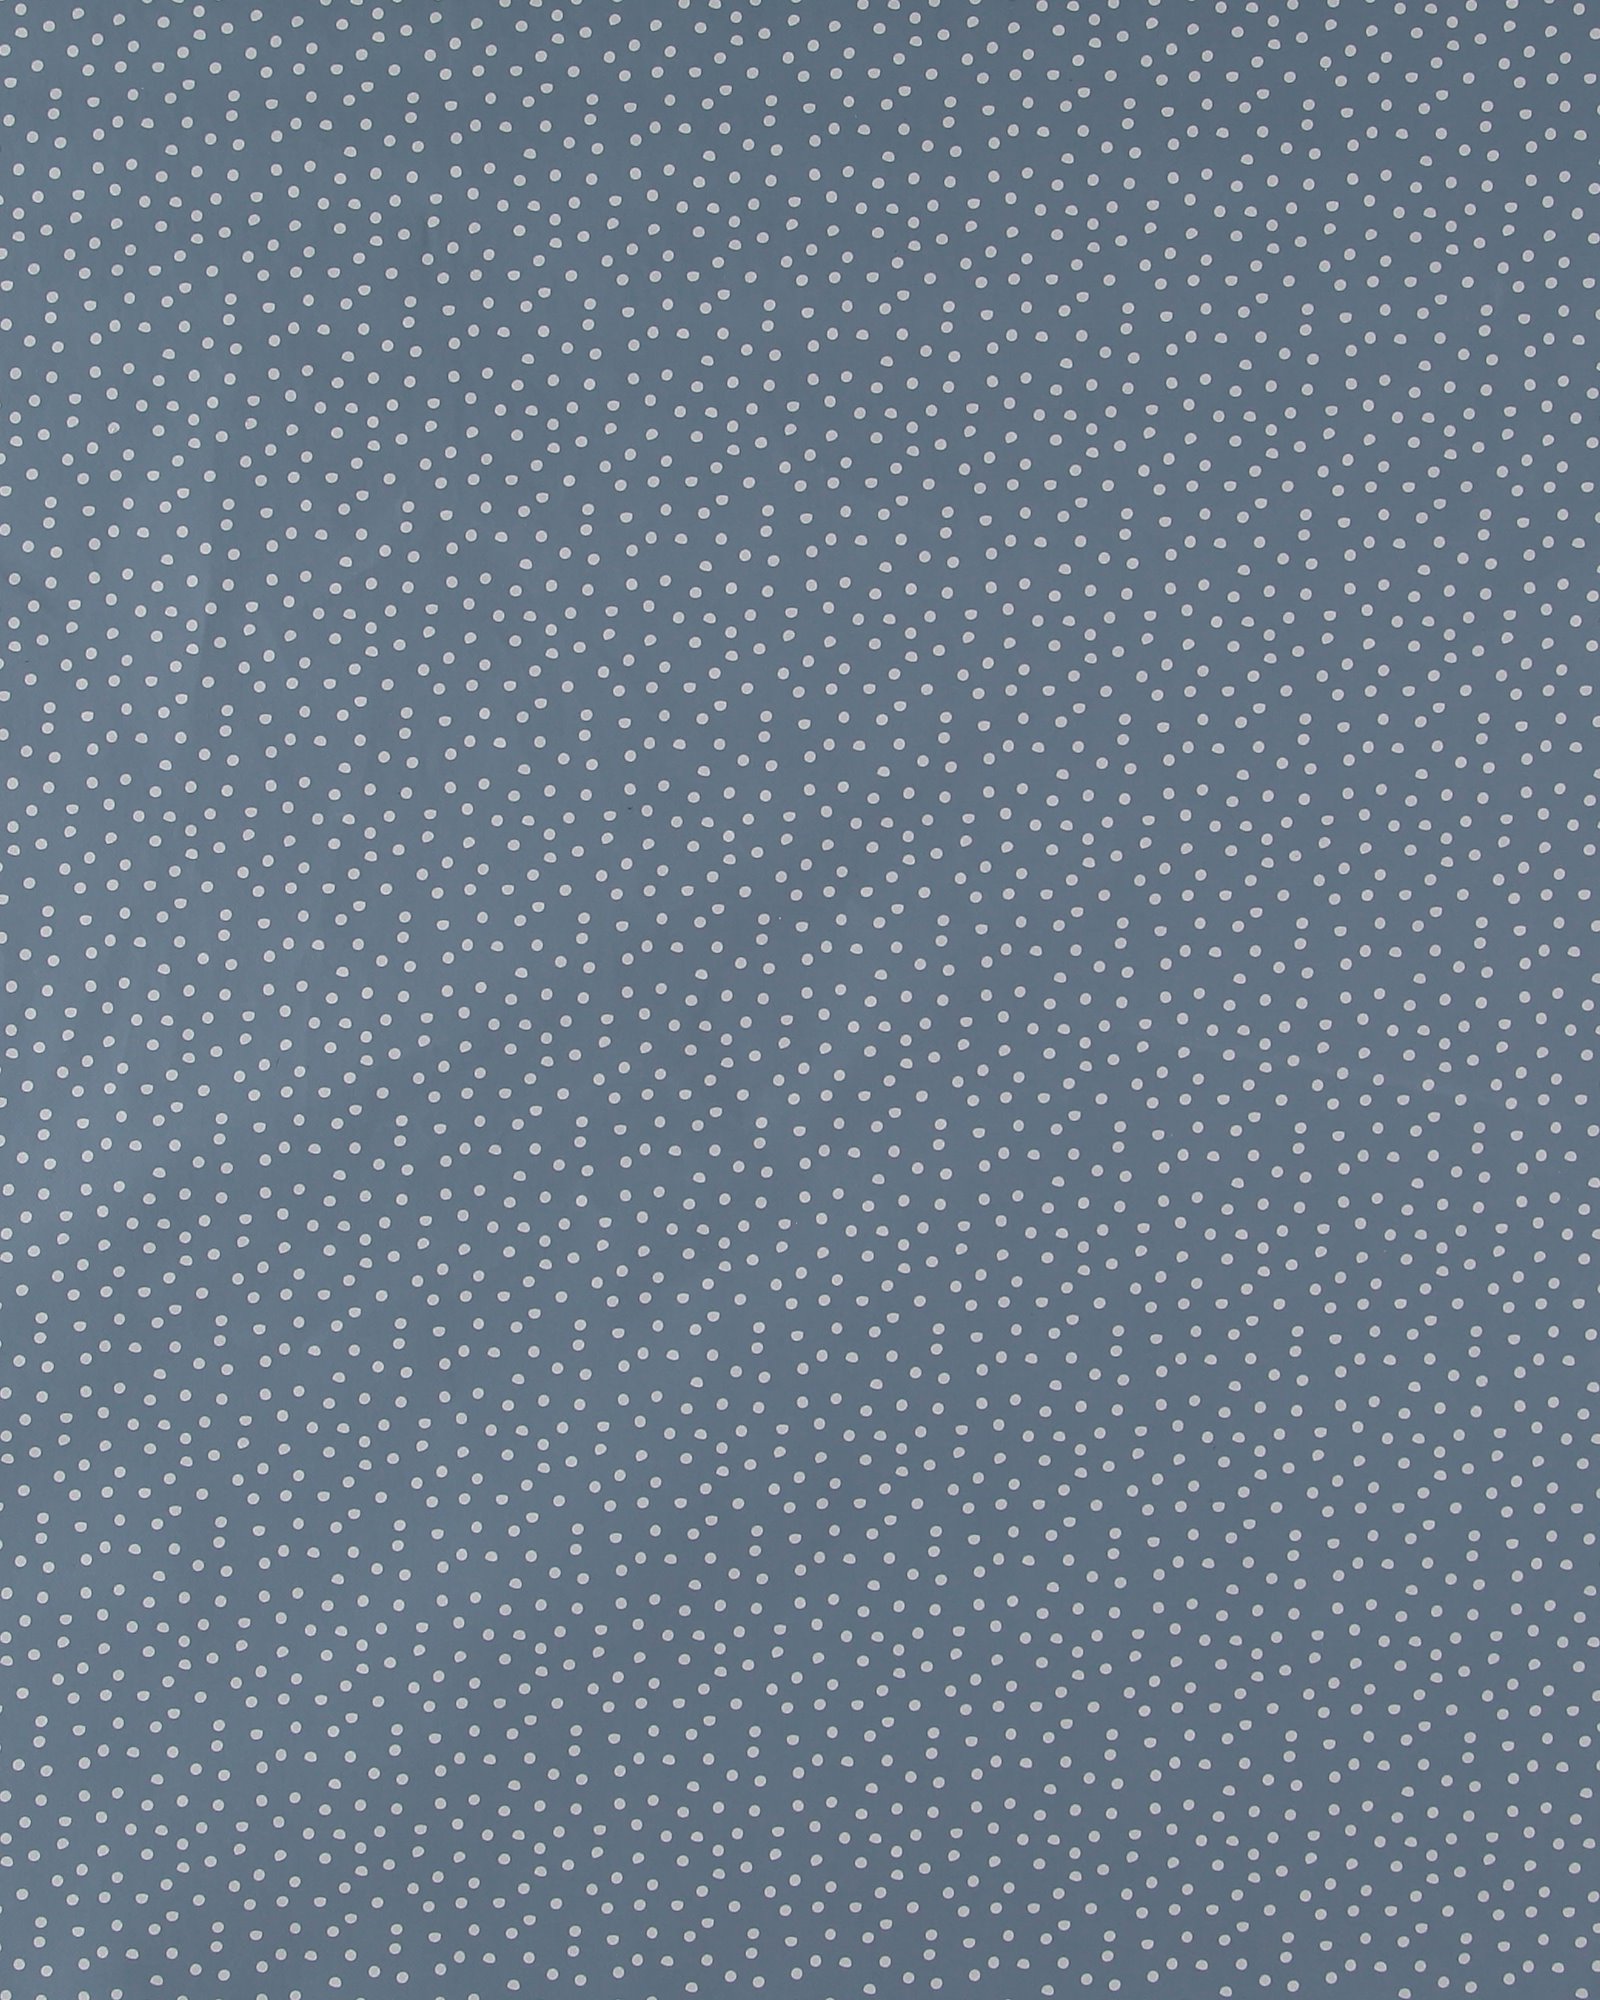 Non-woven oilcloth l blue w white dots 866116_pack_sp